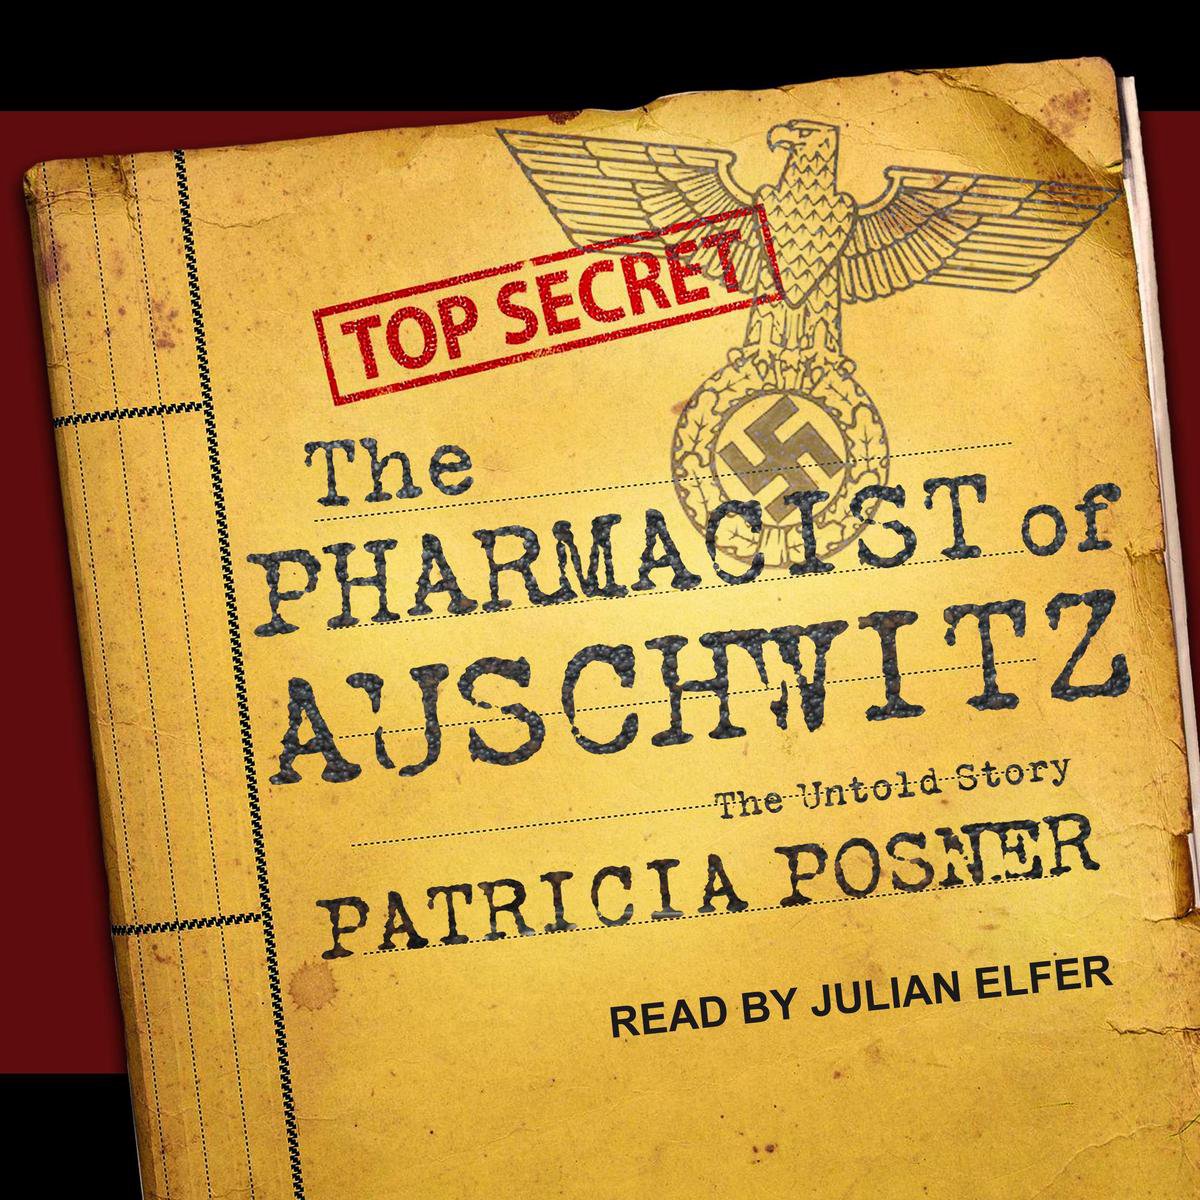 The Pharmacist of Auschwitz - Patricia Posner